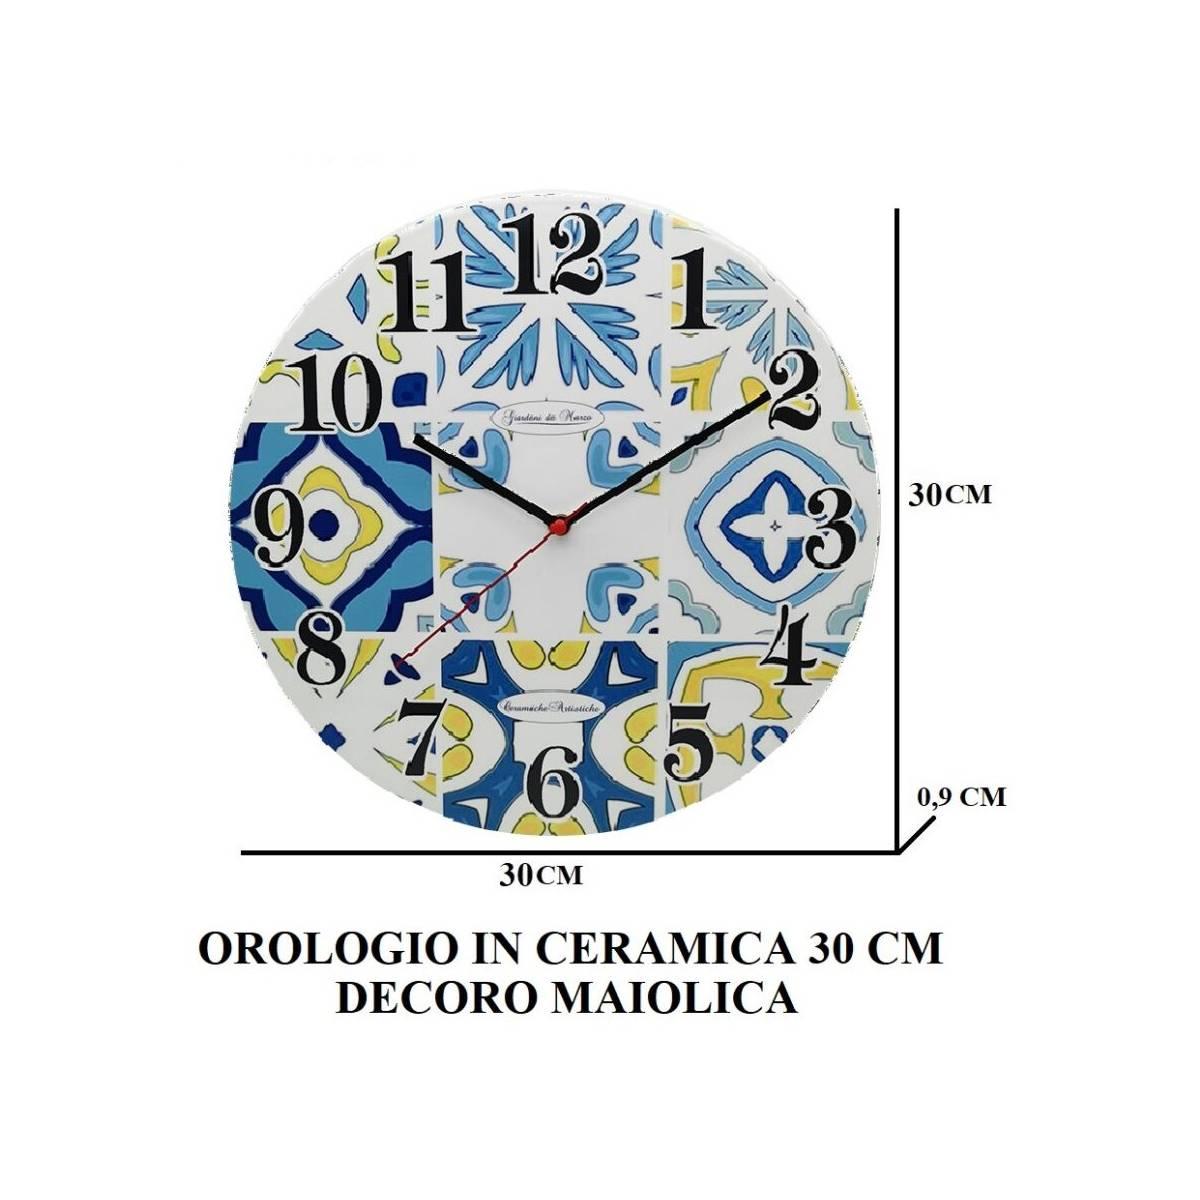 Orologio in ceramica 30cm decoro maiolica